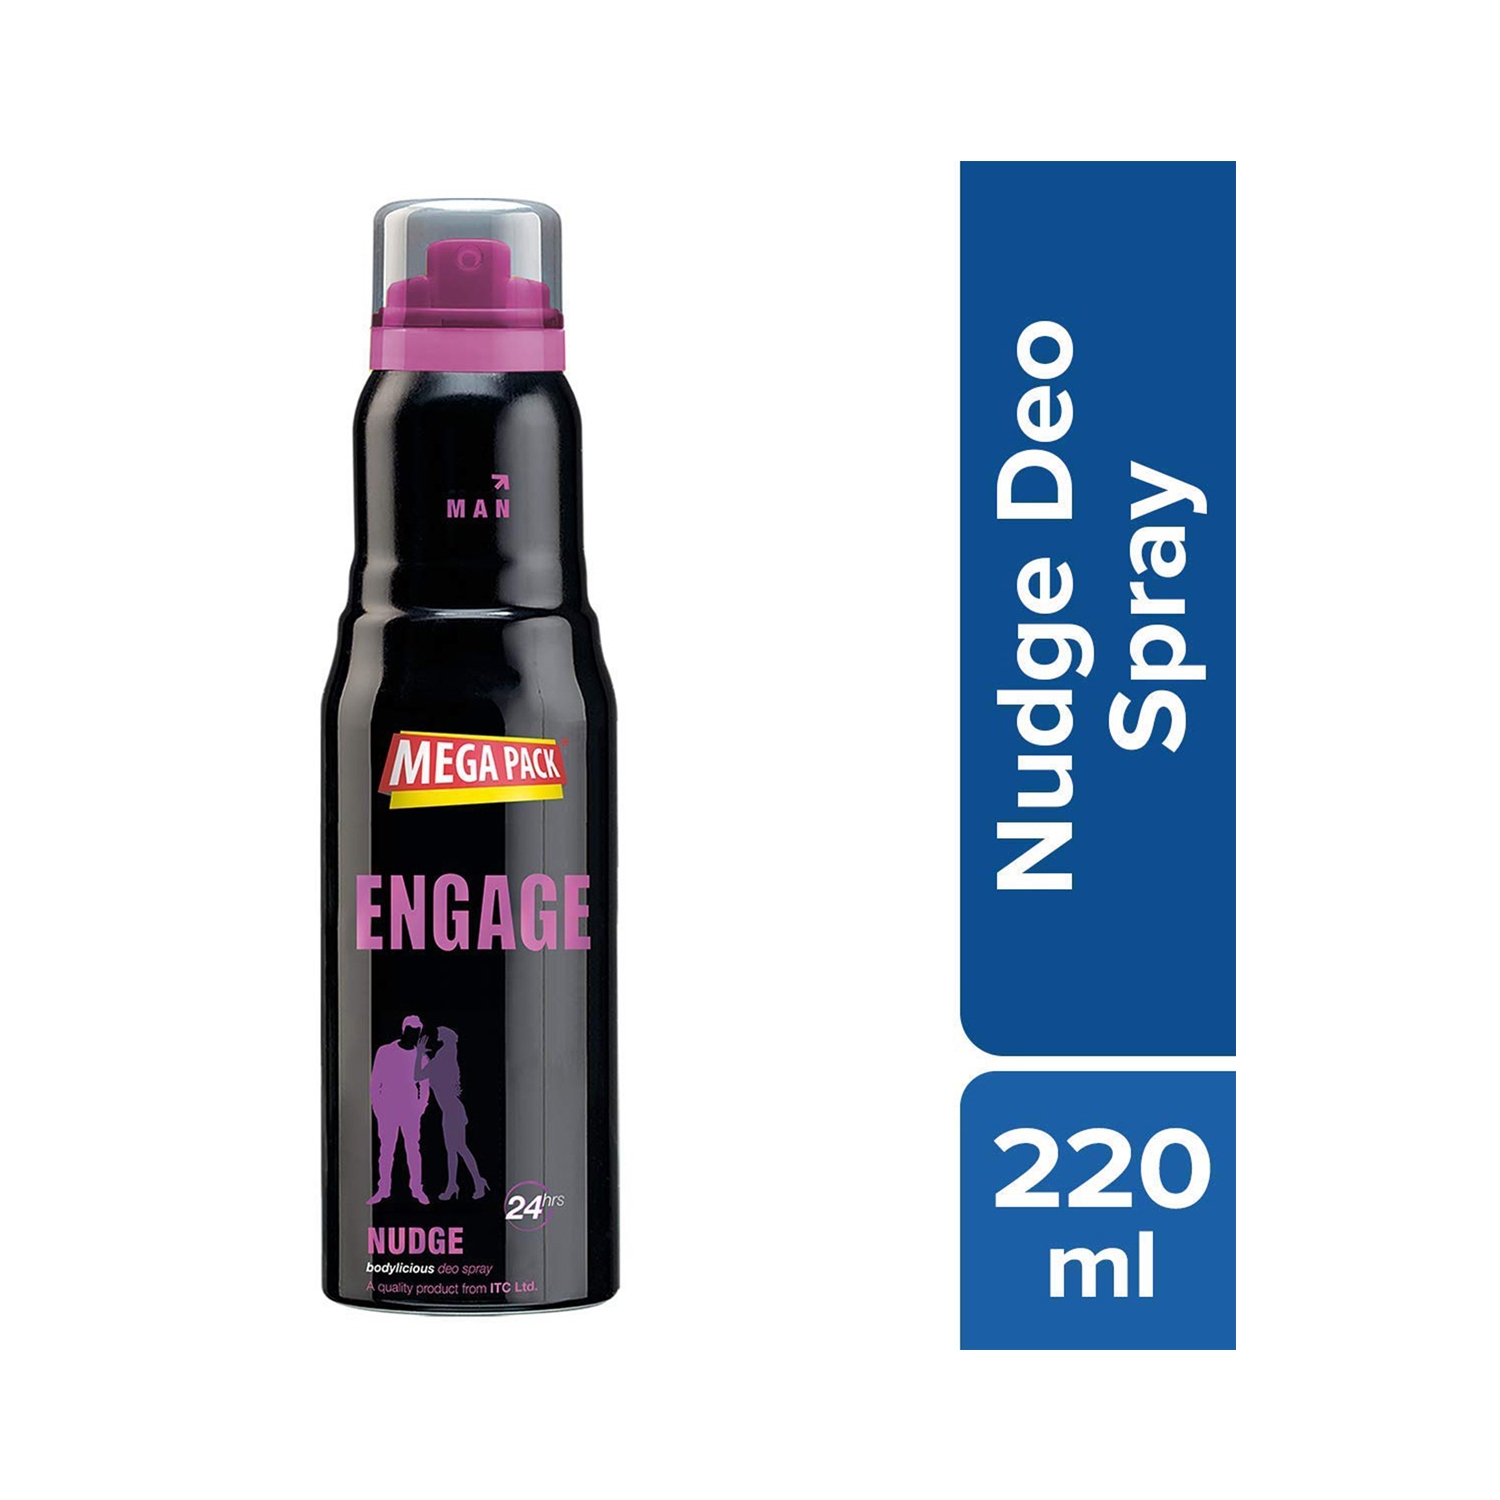 Engage | Engage Nudge Deodorant Spray For Man (220ml)